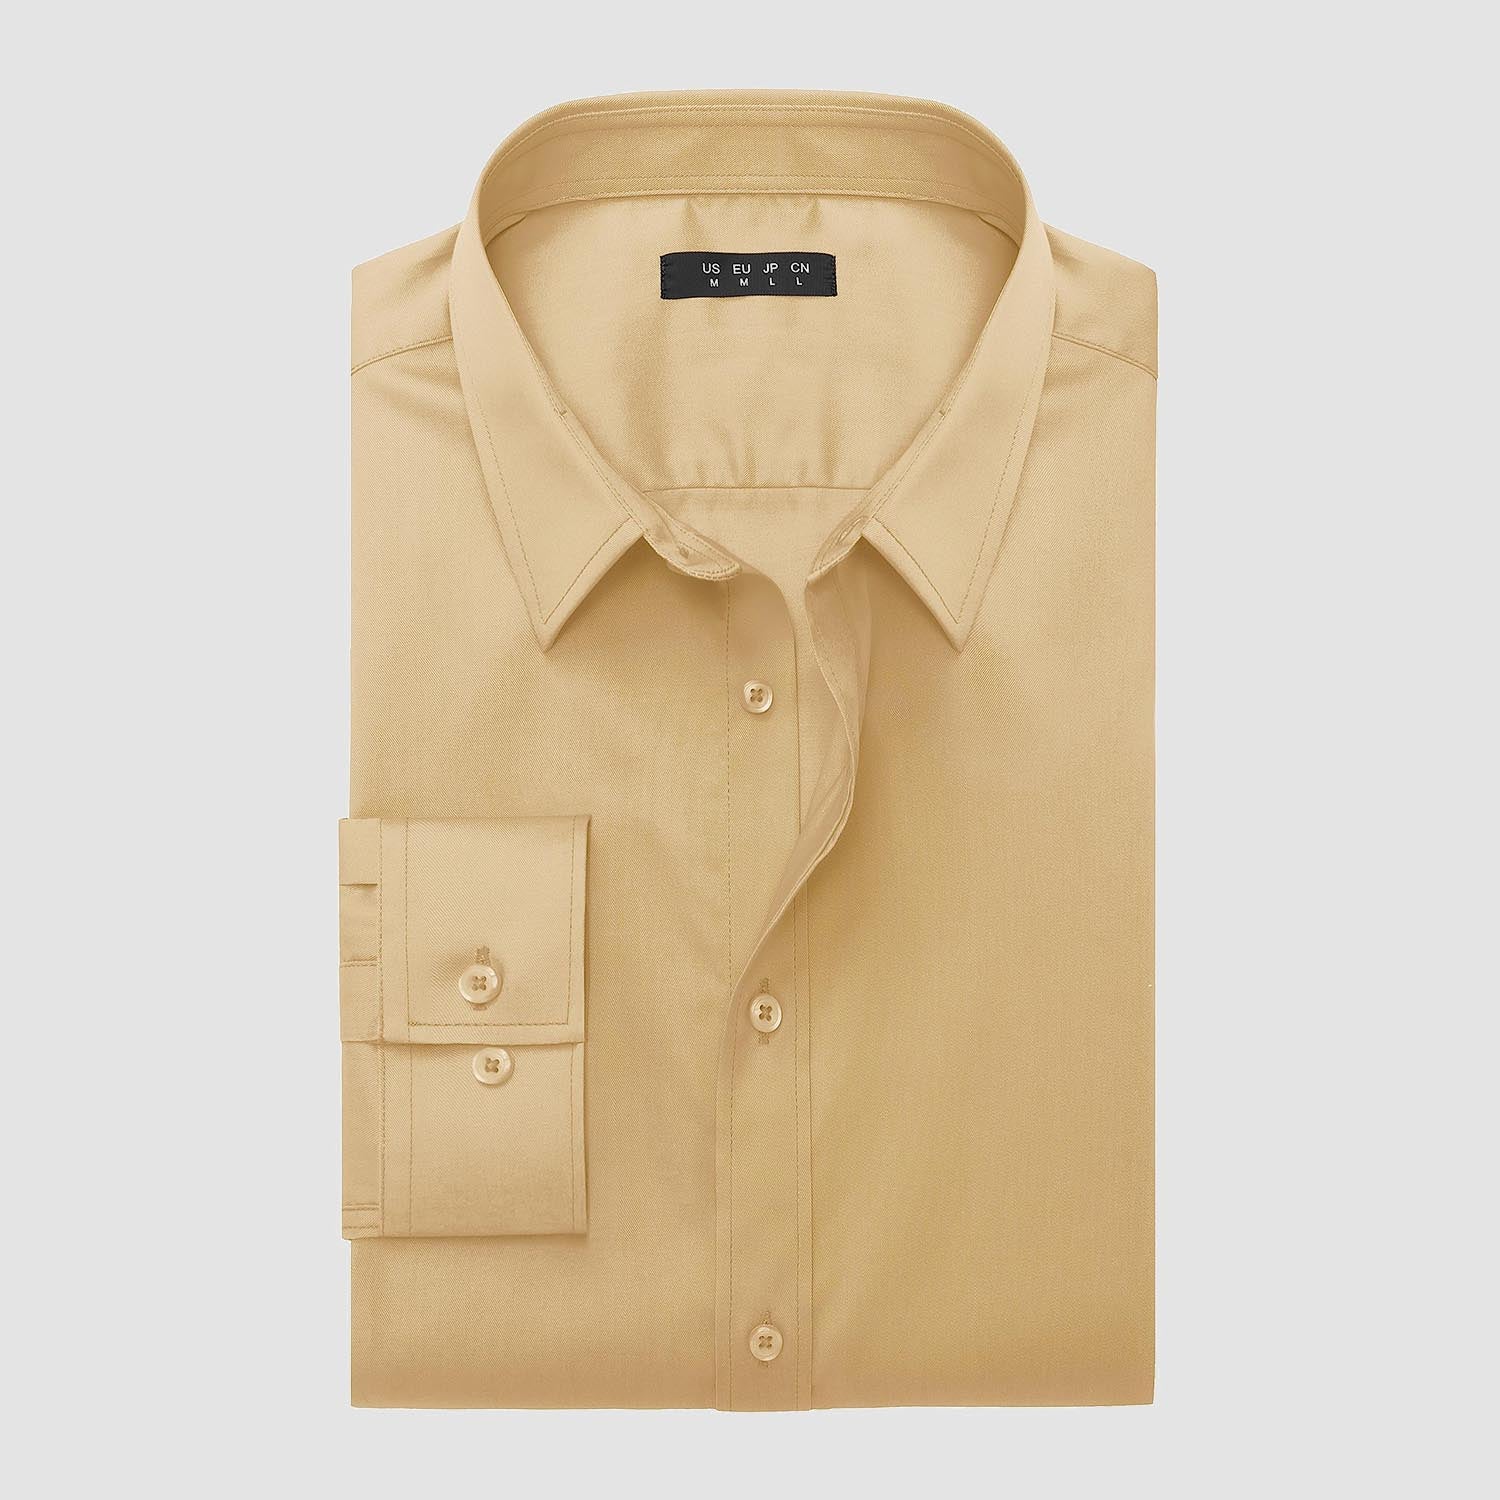 Men's Long Sleeve Shirts Wrinkle-Free Slim Fit Shirt